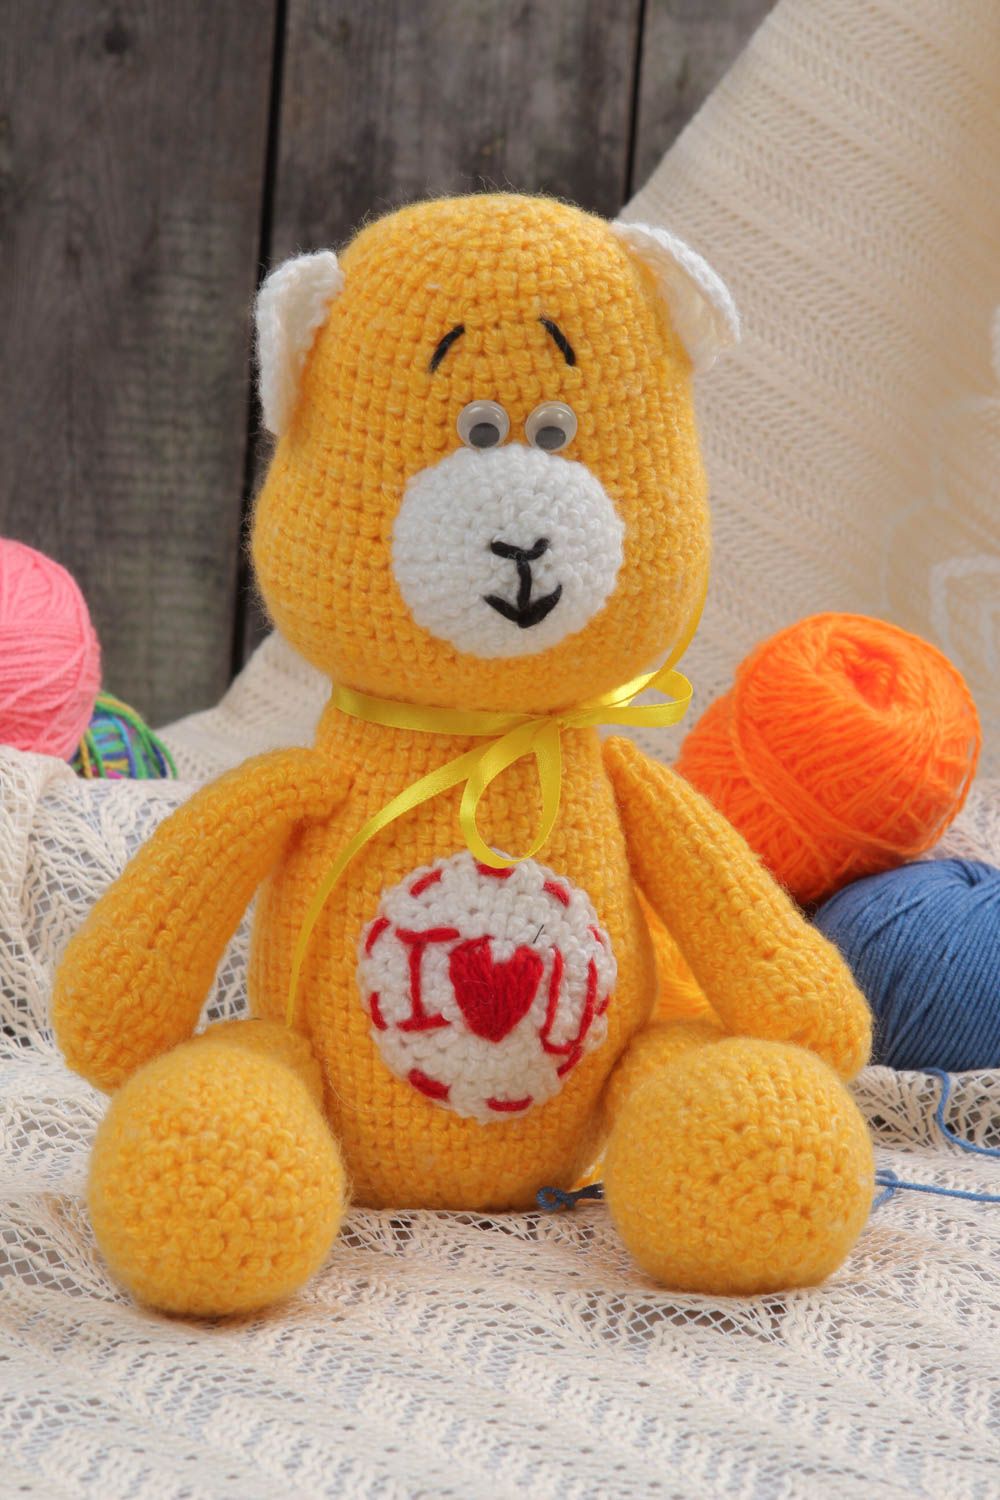 Cute handmade soft toy crochet toy nursery design interior decorating ideas photo 1